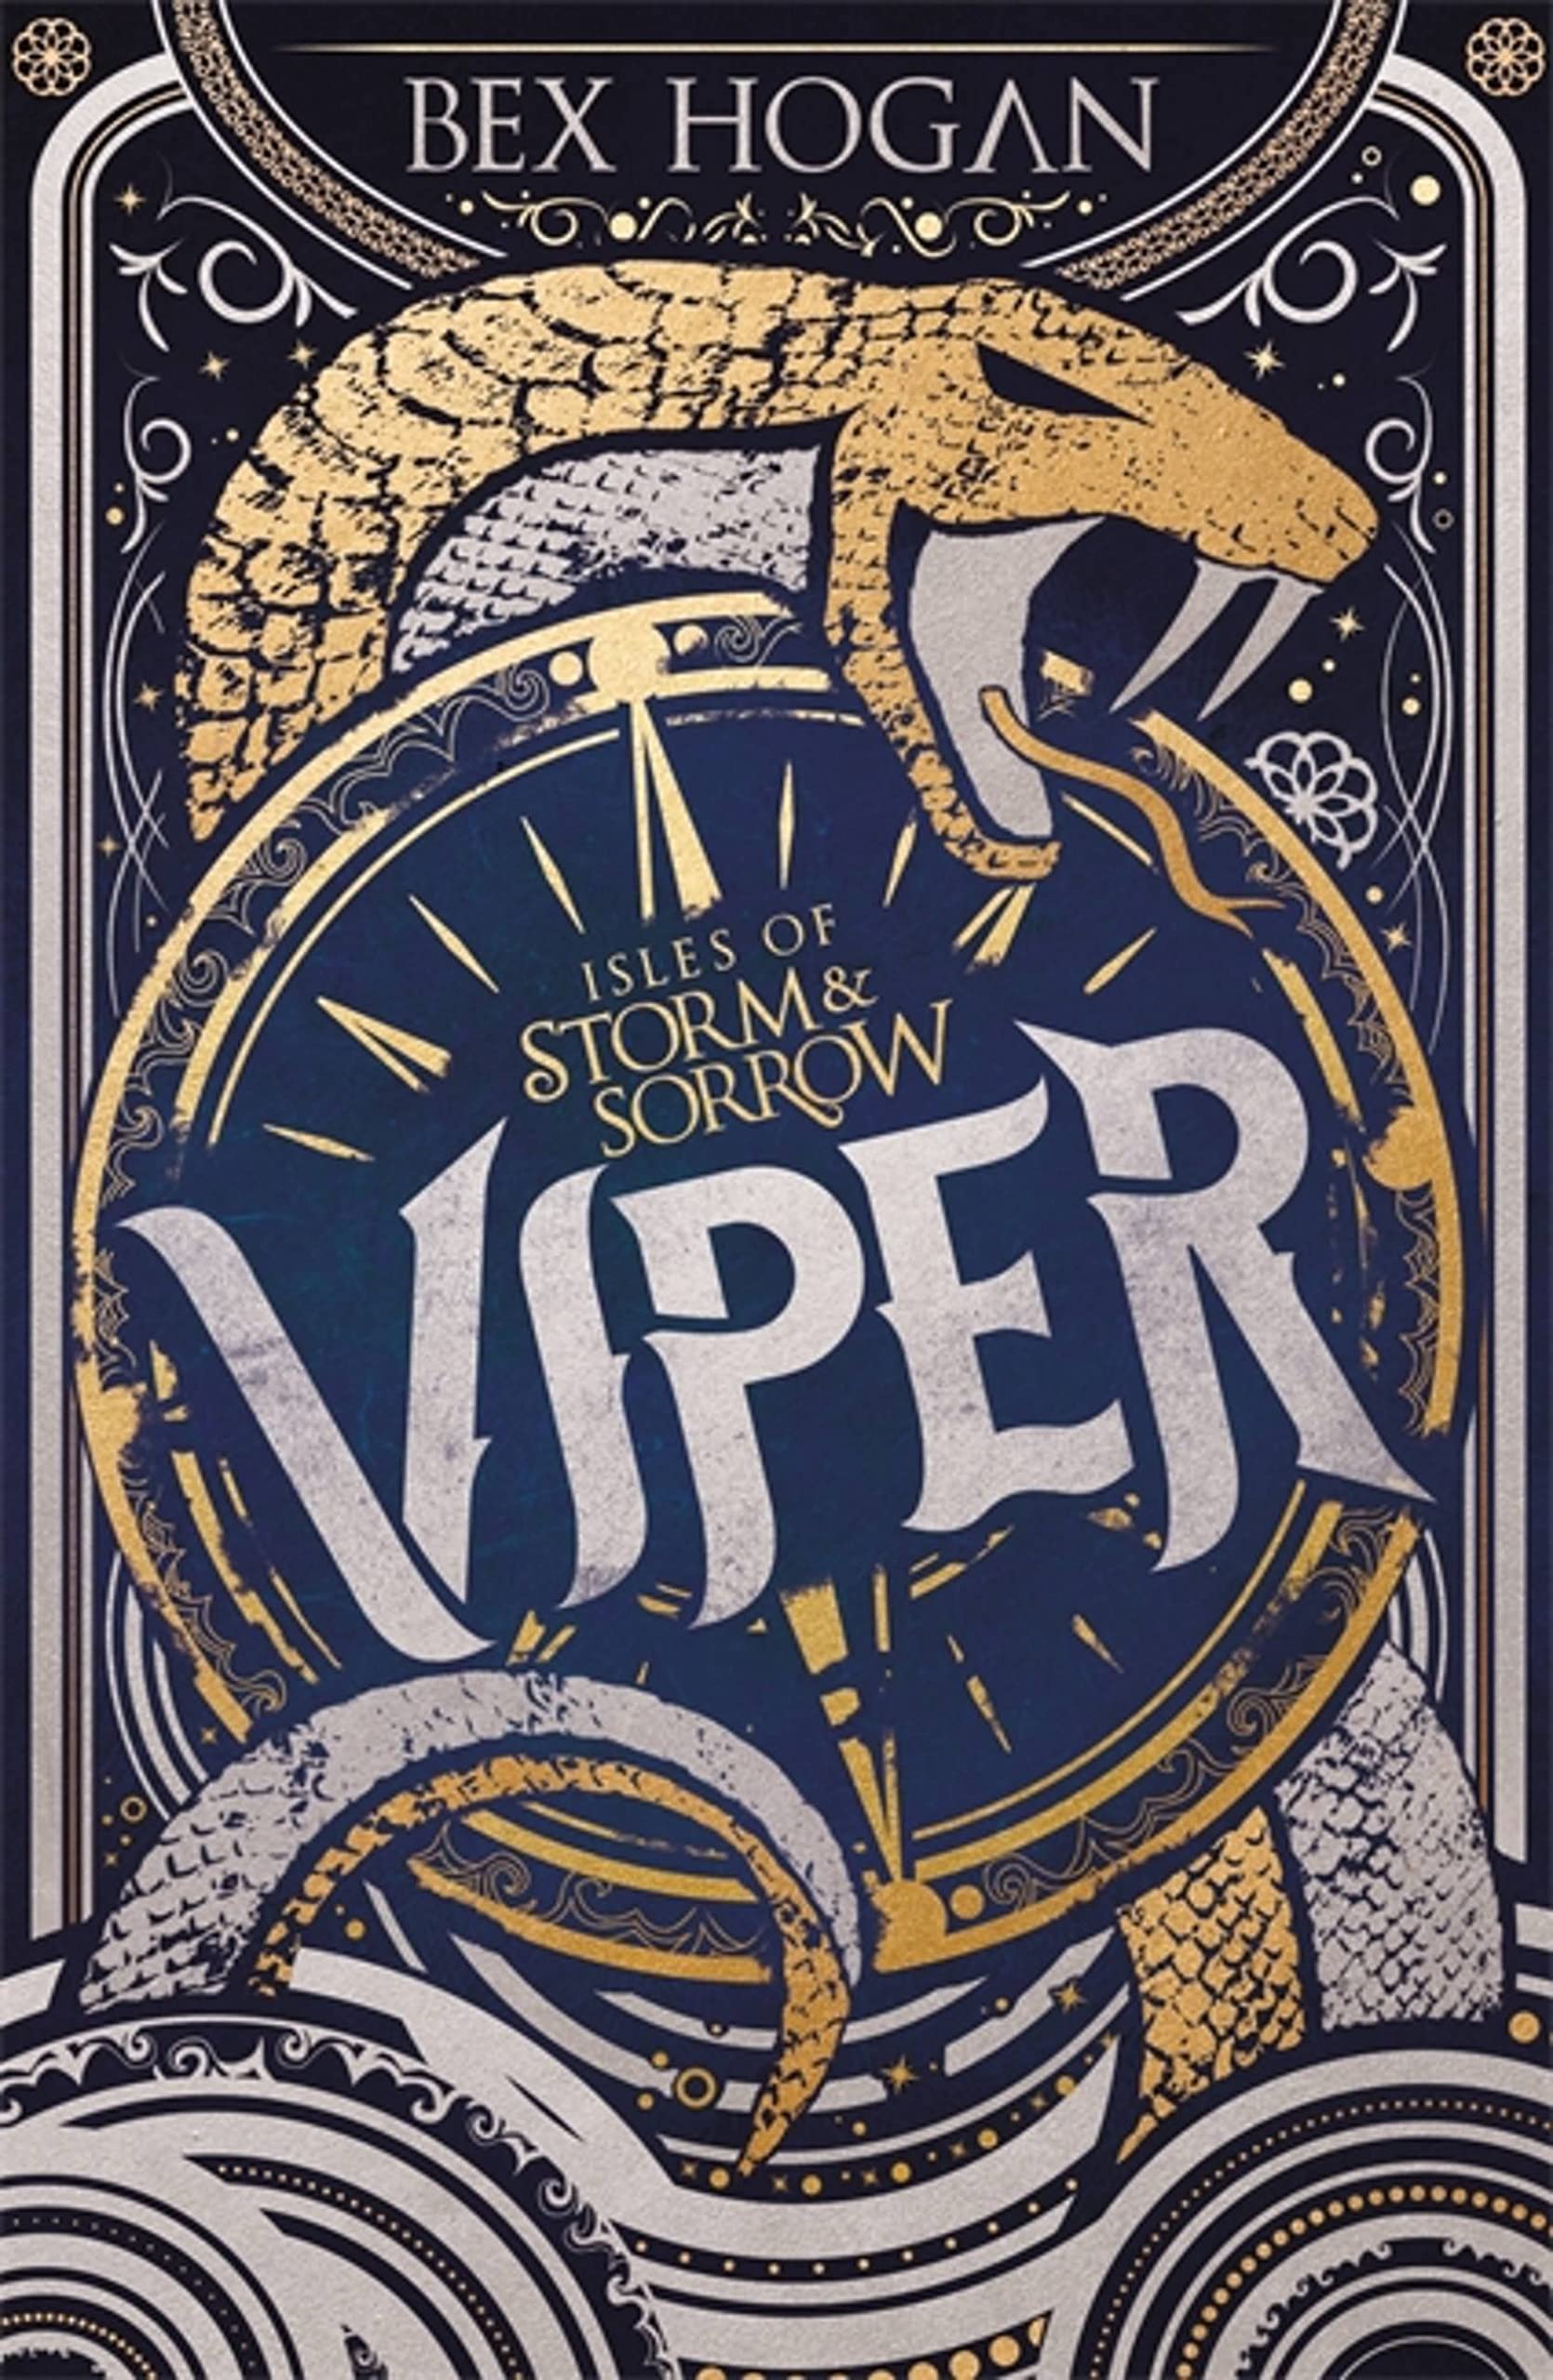 Viper: Book 1 (Isles of Storm and Sorrow)